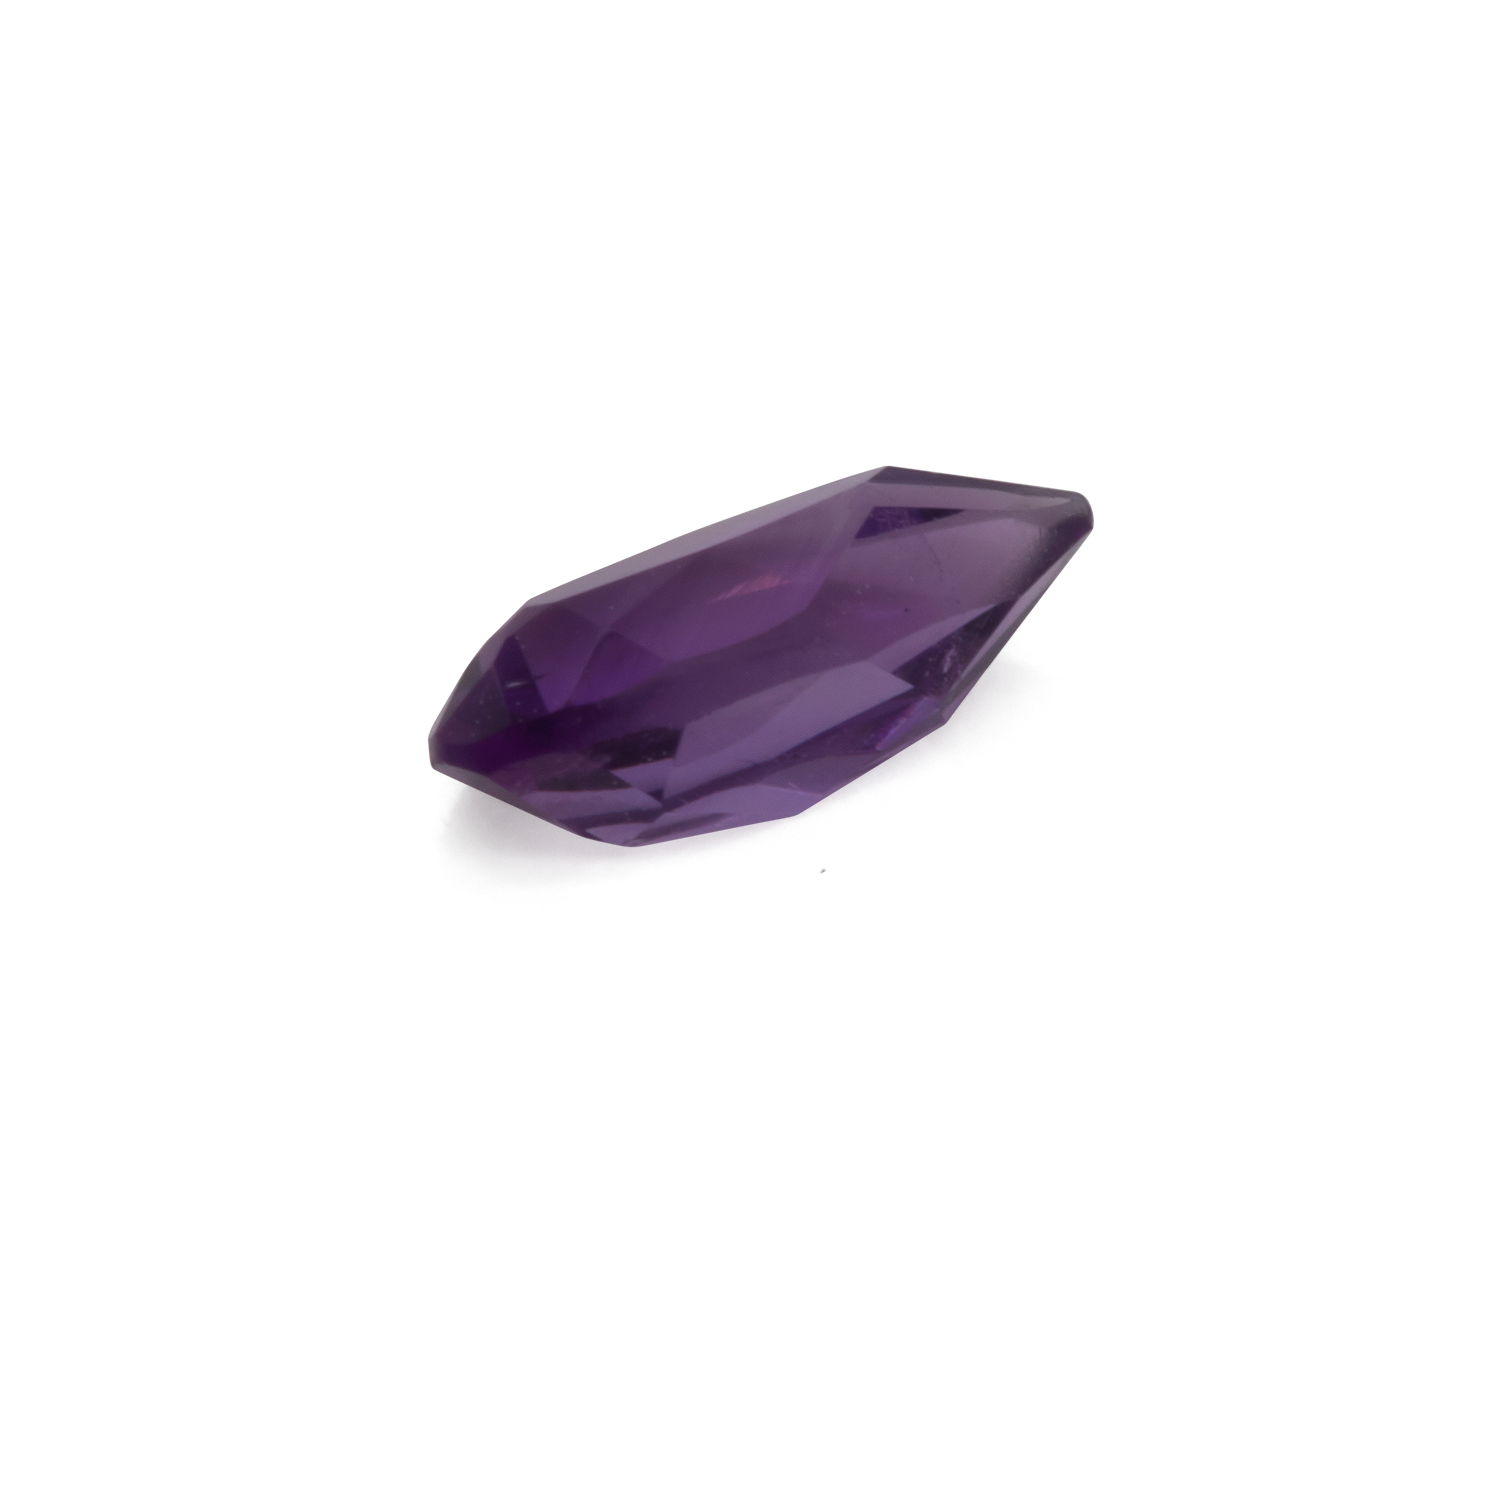 Amethyst - purple, pearshape, 6x3.2 mm, 0.22-0.26 cts, No. AMY61001